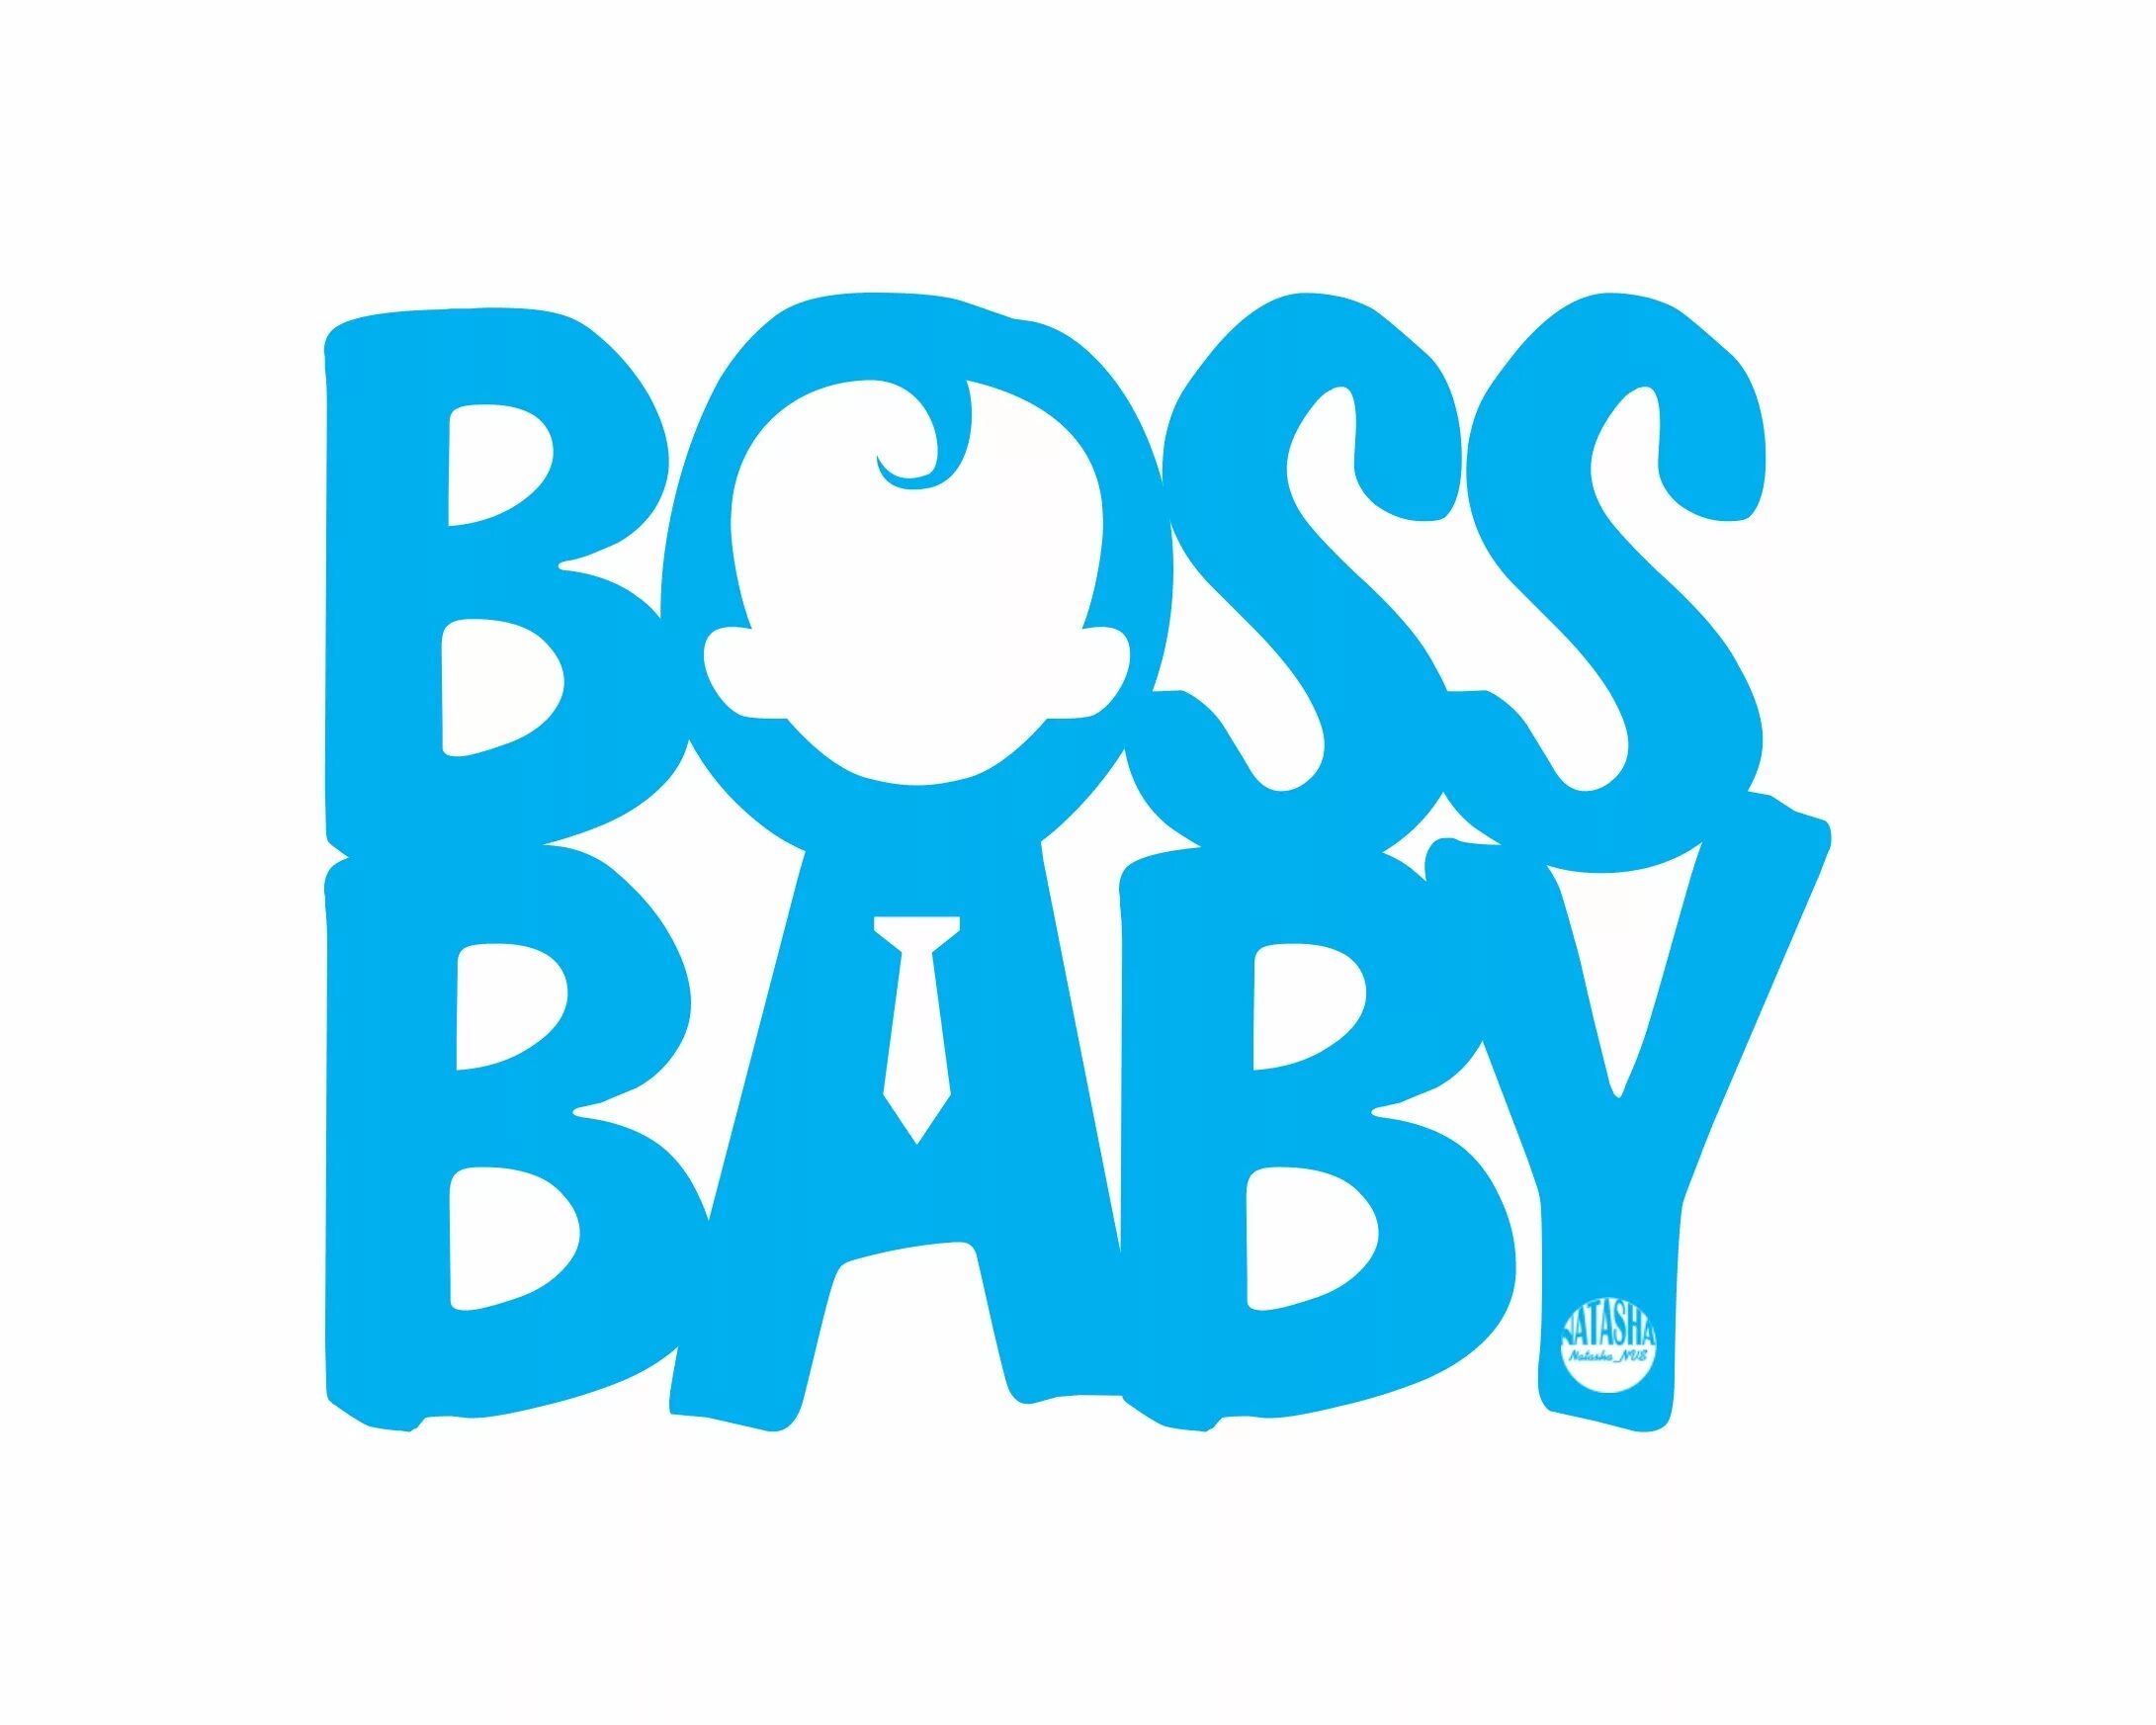 Boss детская. Boss Baby логотип. Босс молокосос надпись. Босс молокосос логотип. Надпись босс Беби.